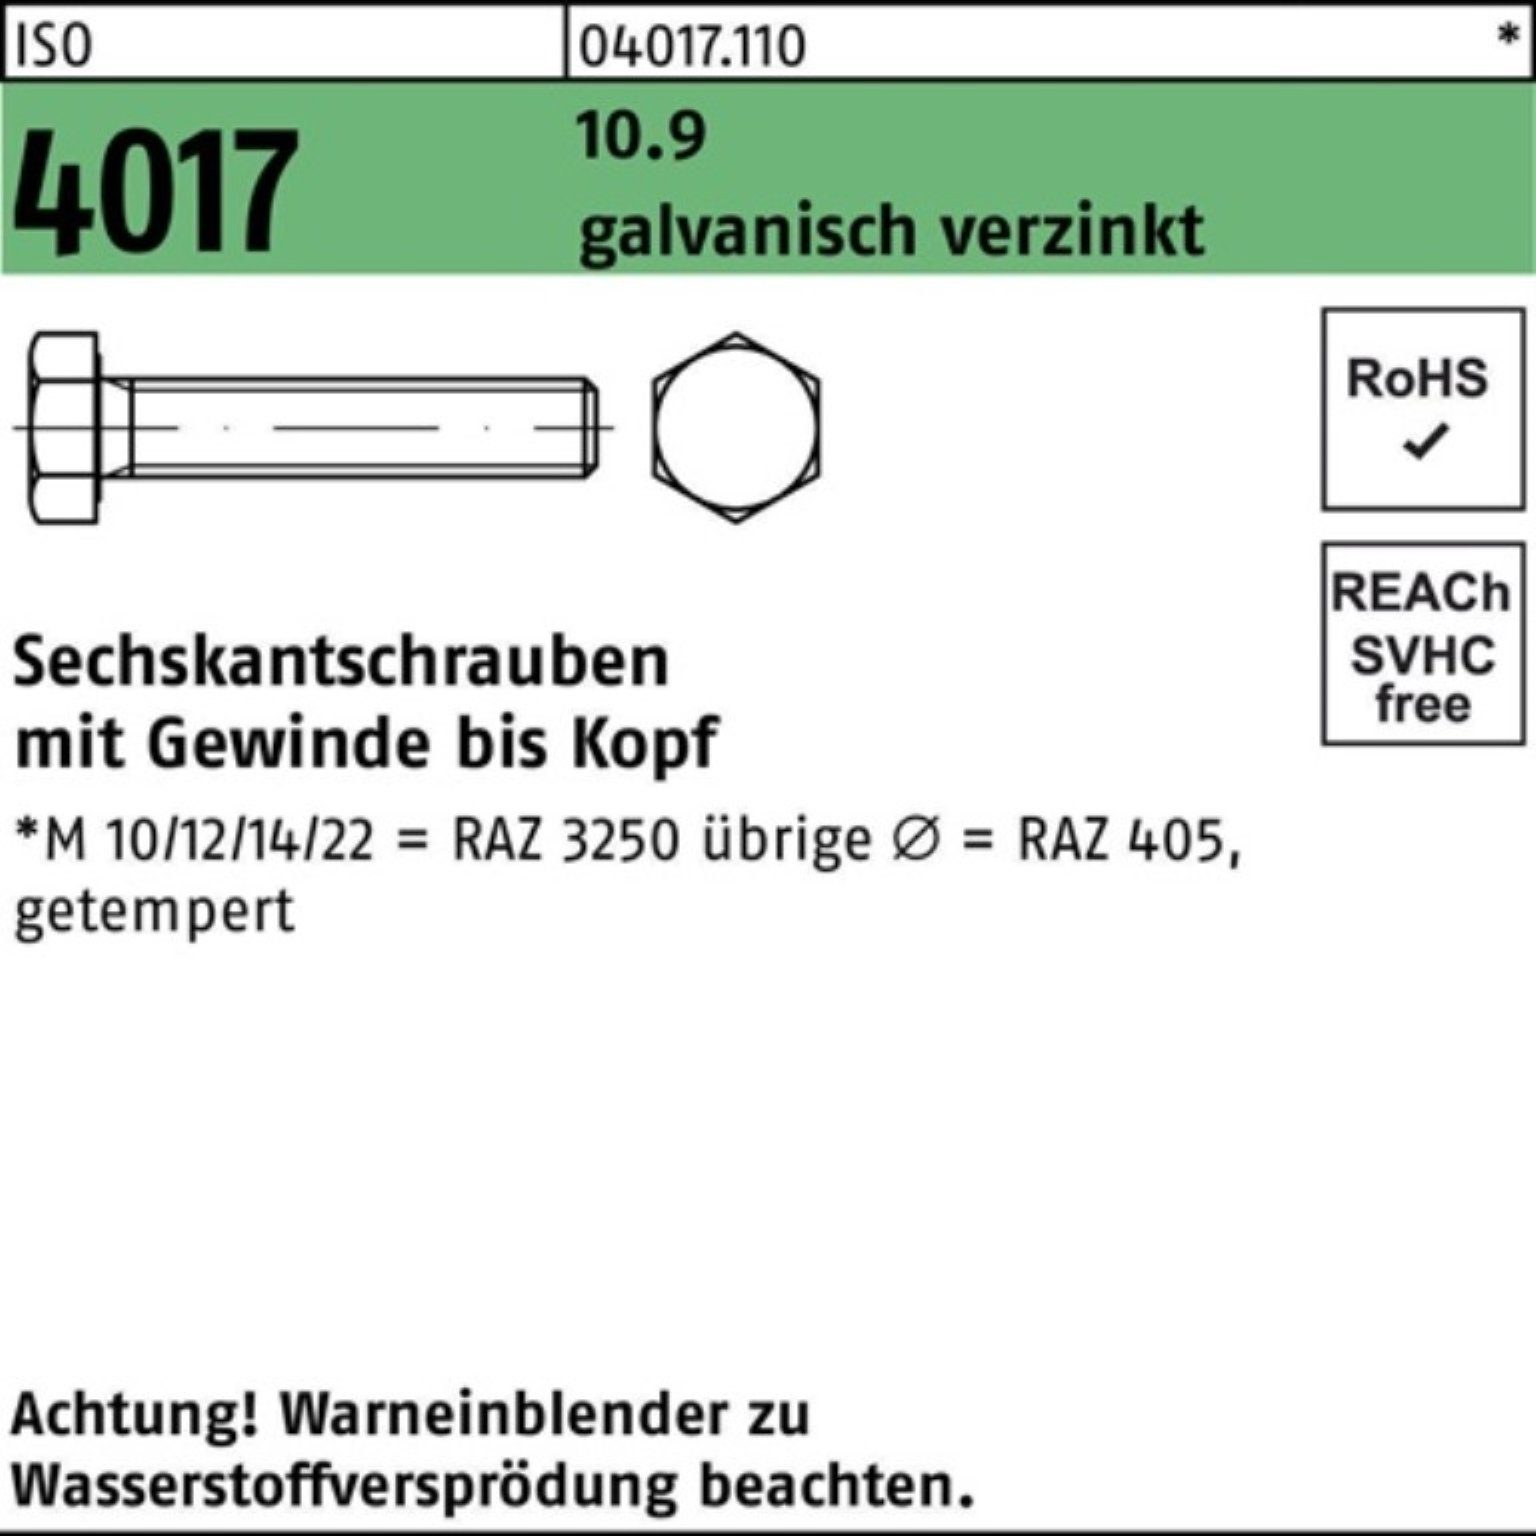 Bufab Sechskantschraube 100er galv.verz. M10x 35 Pack Sechskantschraube 100 10.9 ISO VG S 4017